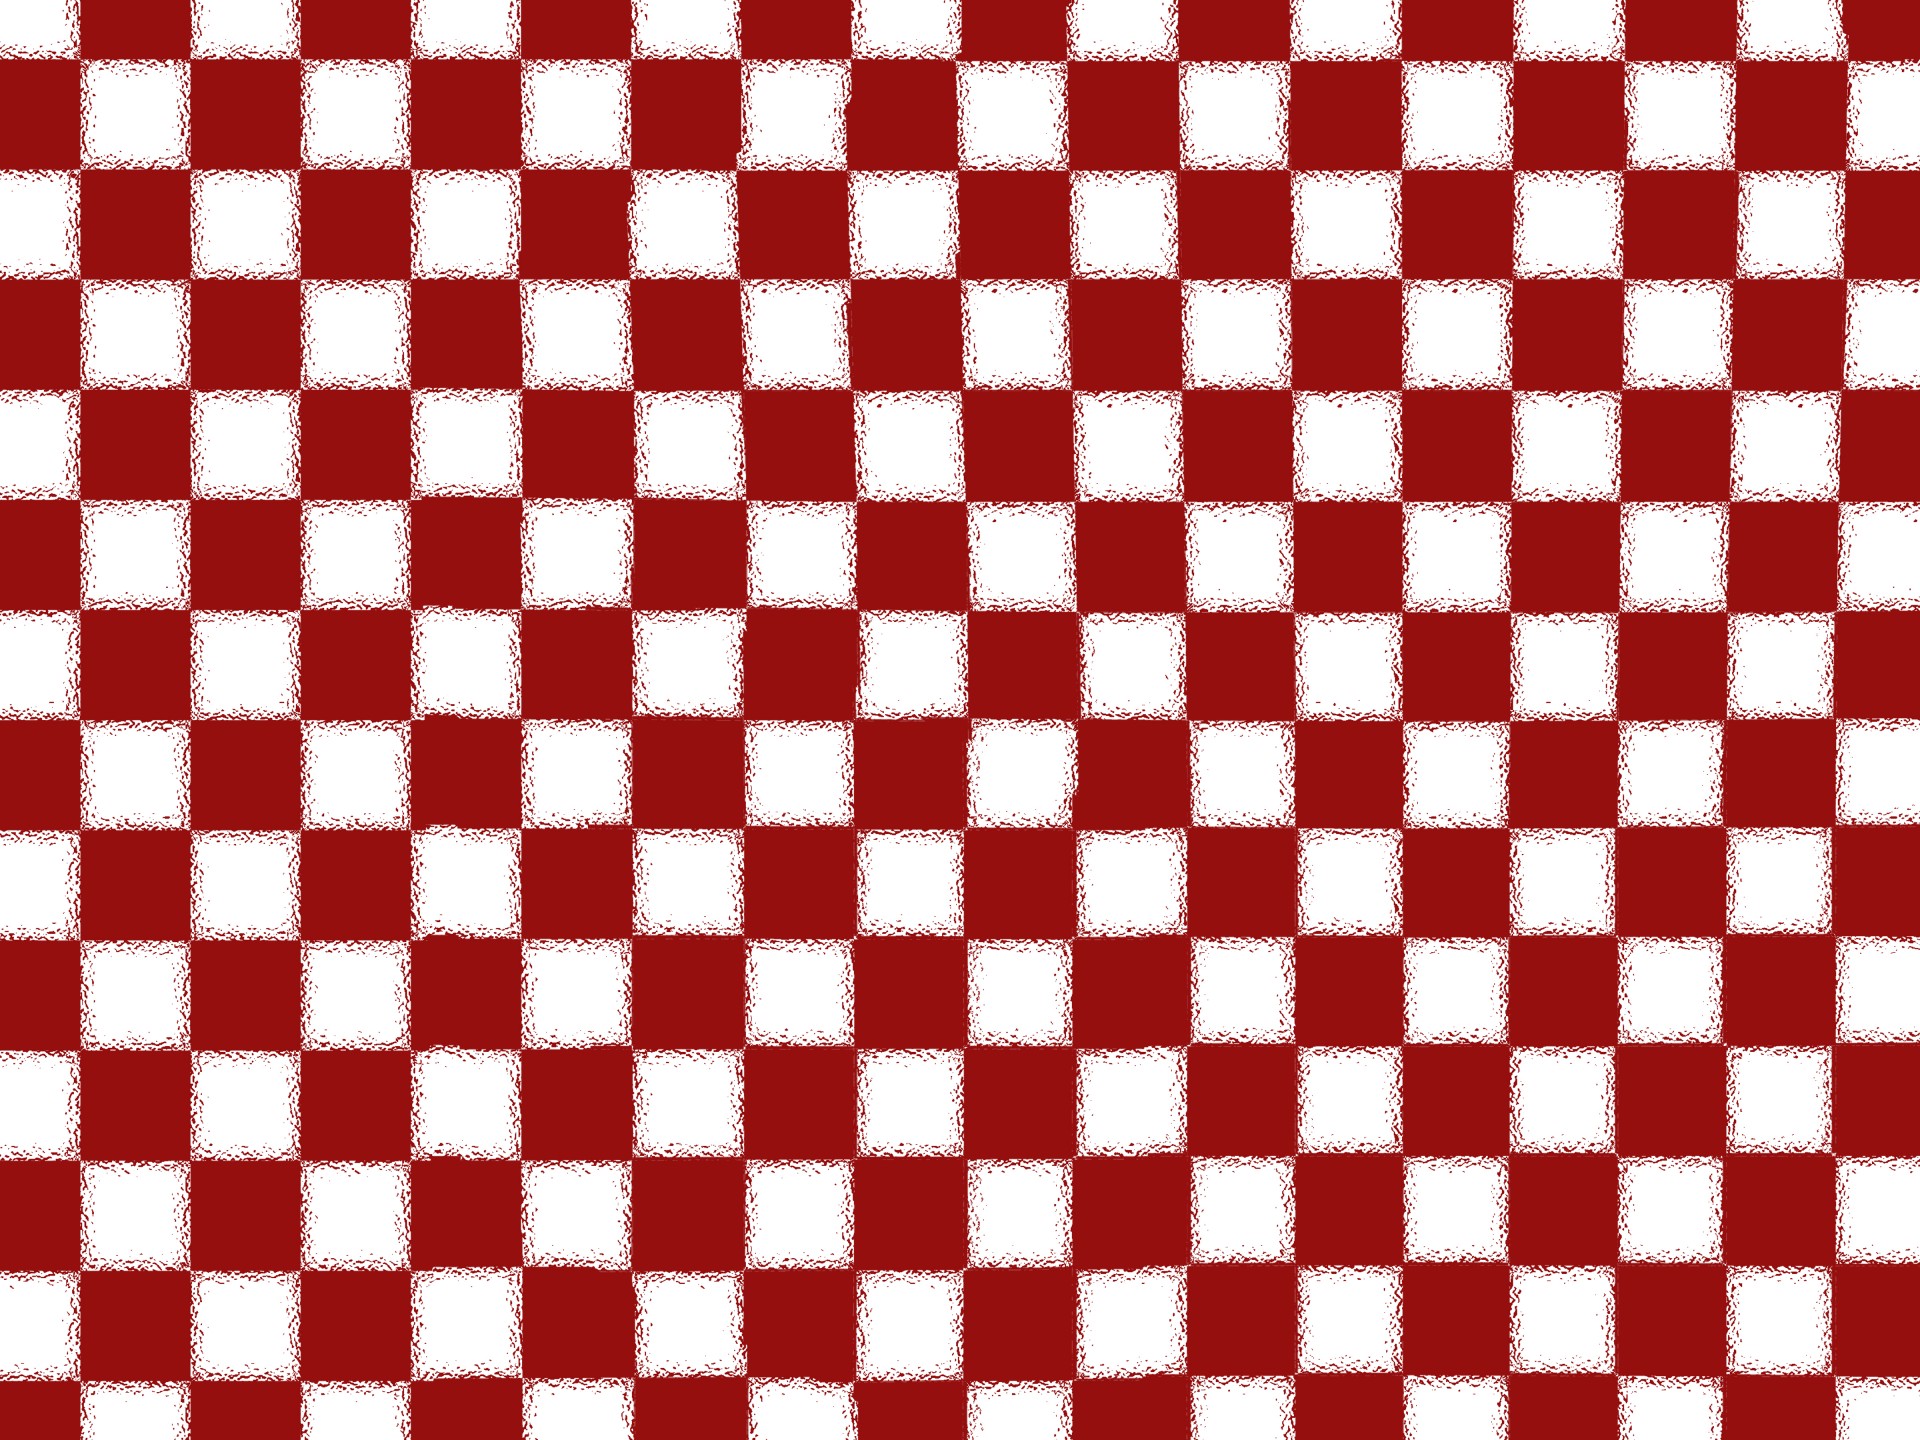 Stylized Checkerboard Background